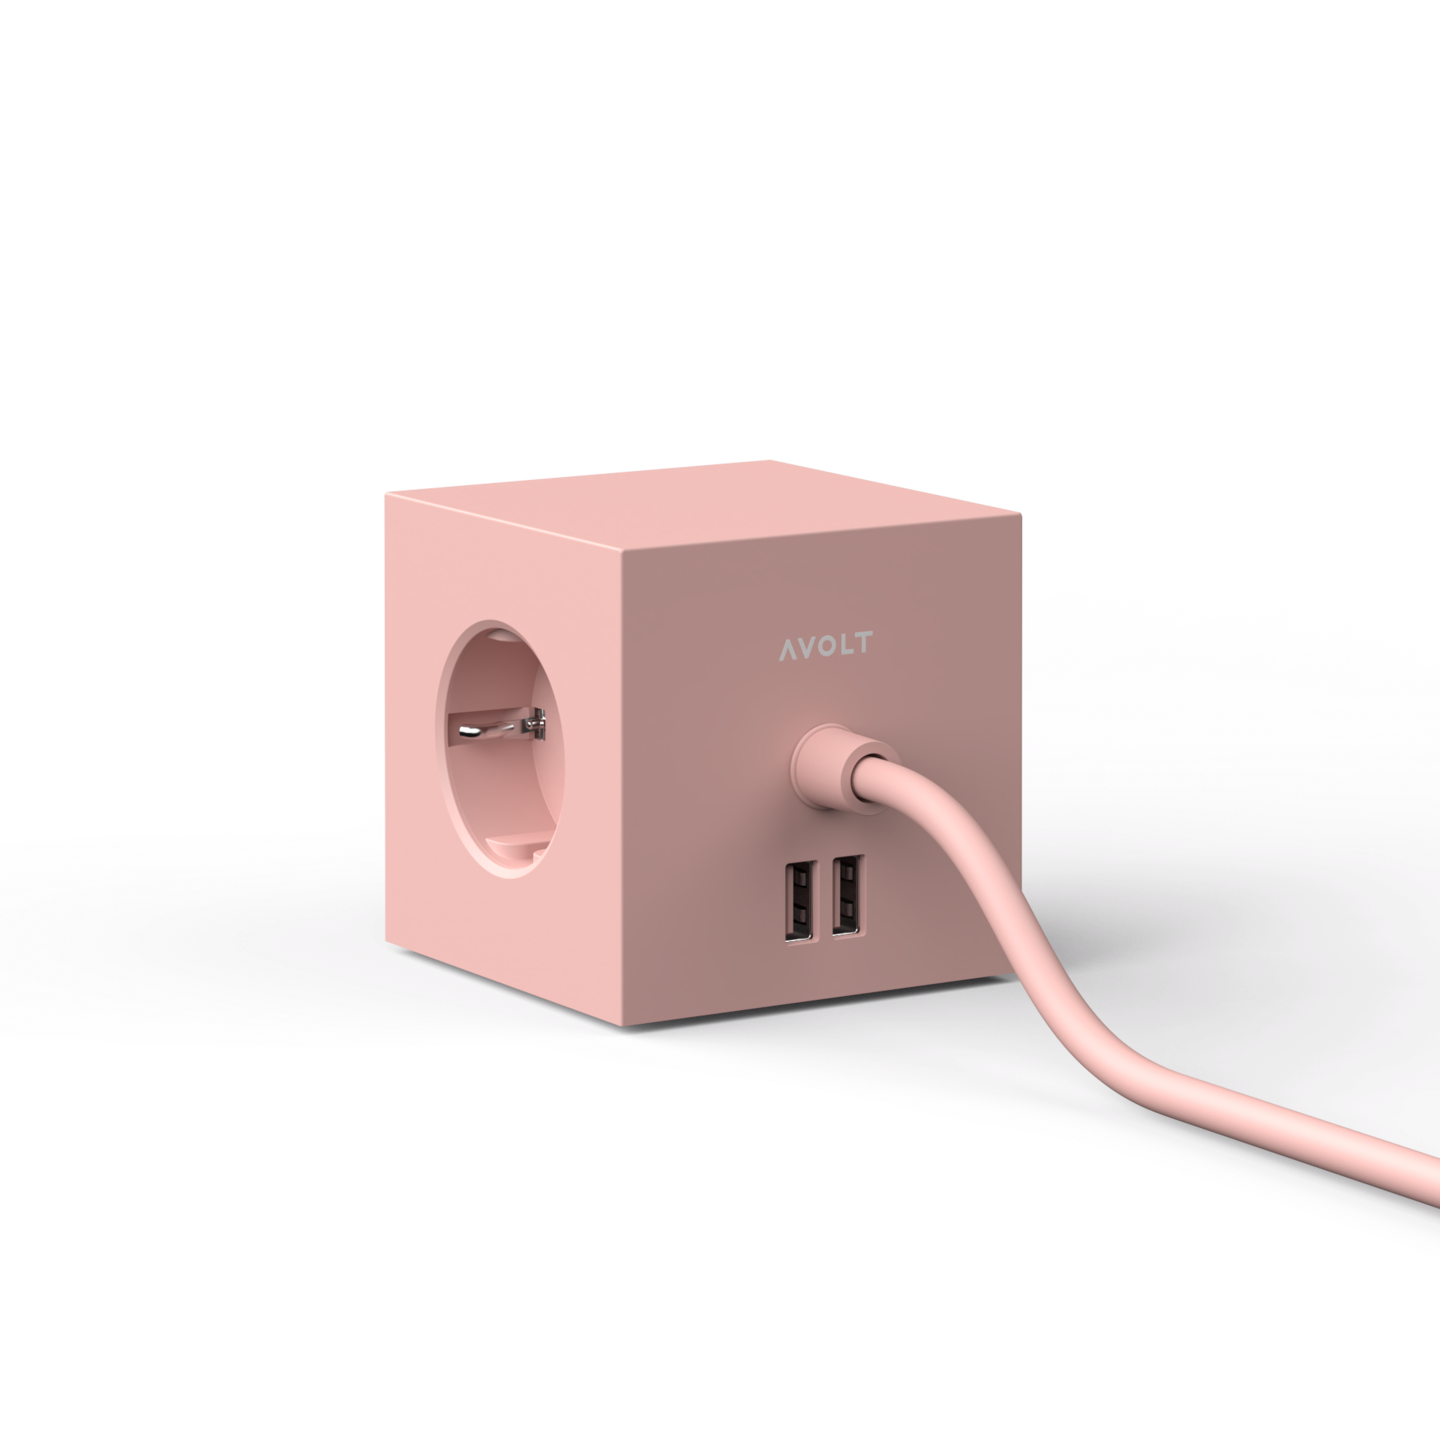 https://royaldesign.com/image/2/avolt-square-1-extension-cord-with-usb-magnet-10